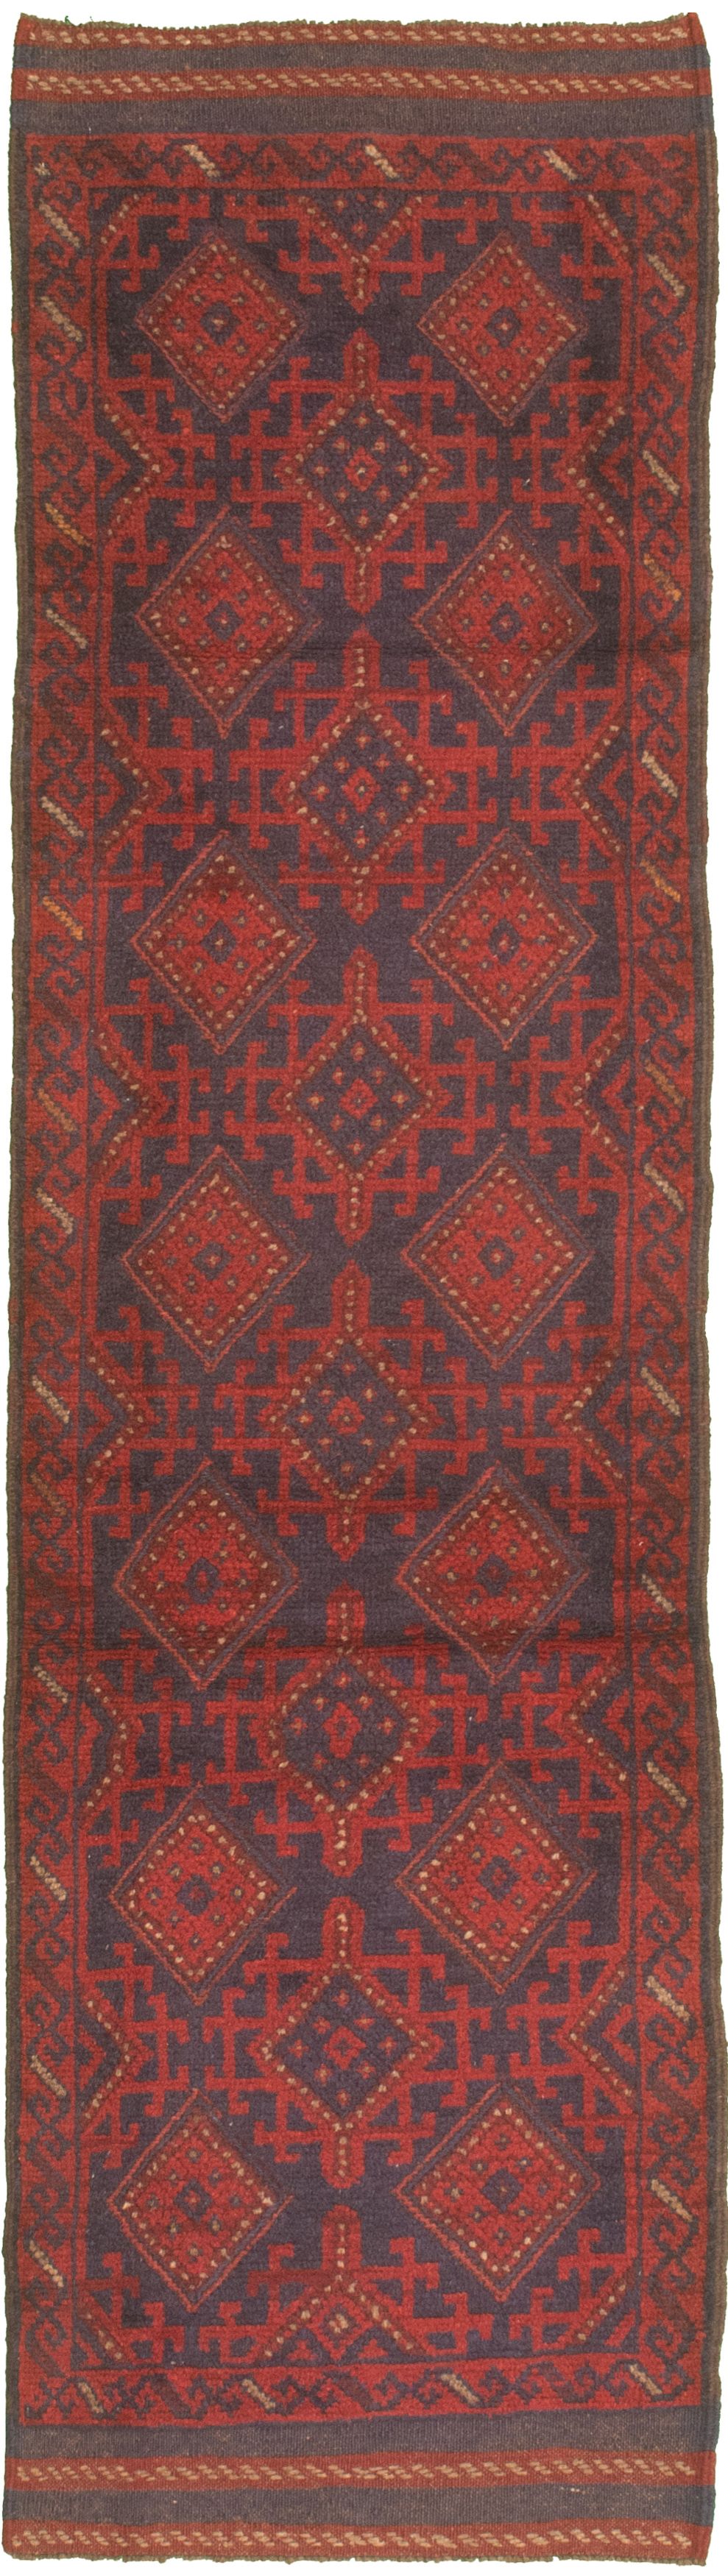 Hand-knotted Tajik Caucasian Red Wool Rug 2'0" x 8'3" (21) Size: 2'0" x 8'3"  